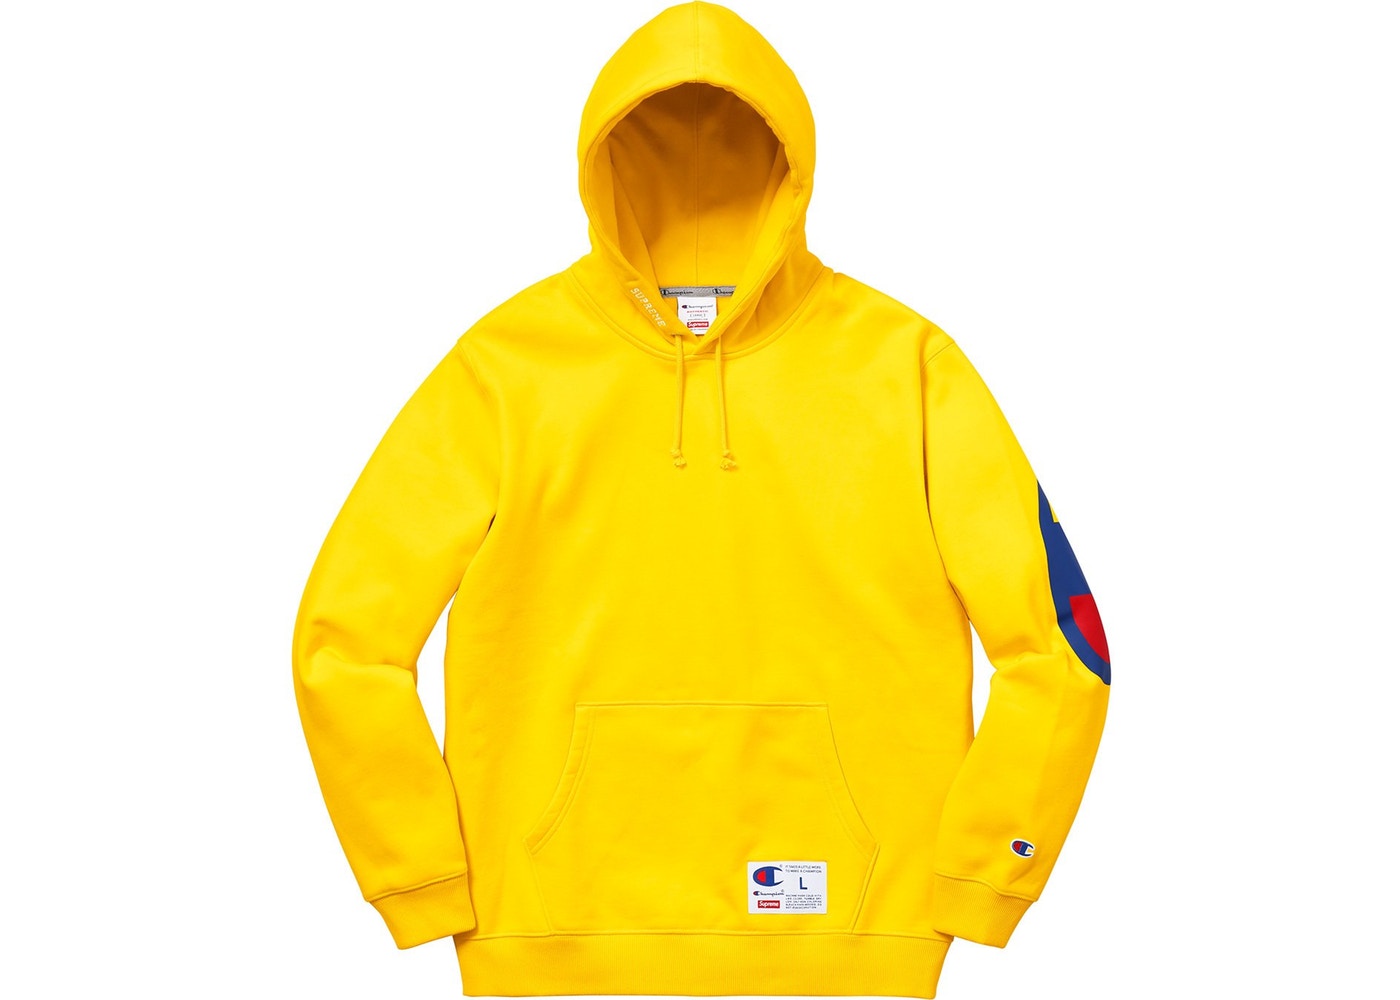 supreme champion hoodie yellow